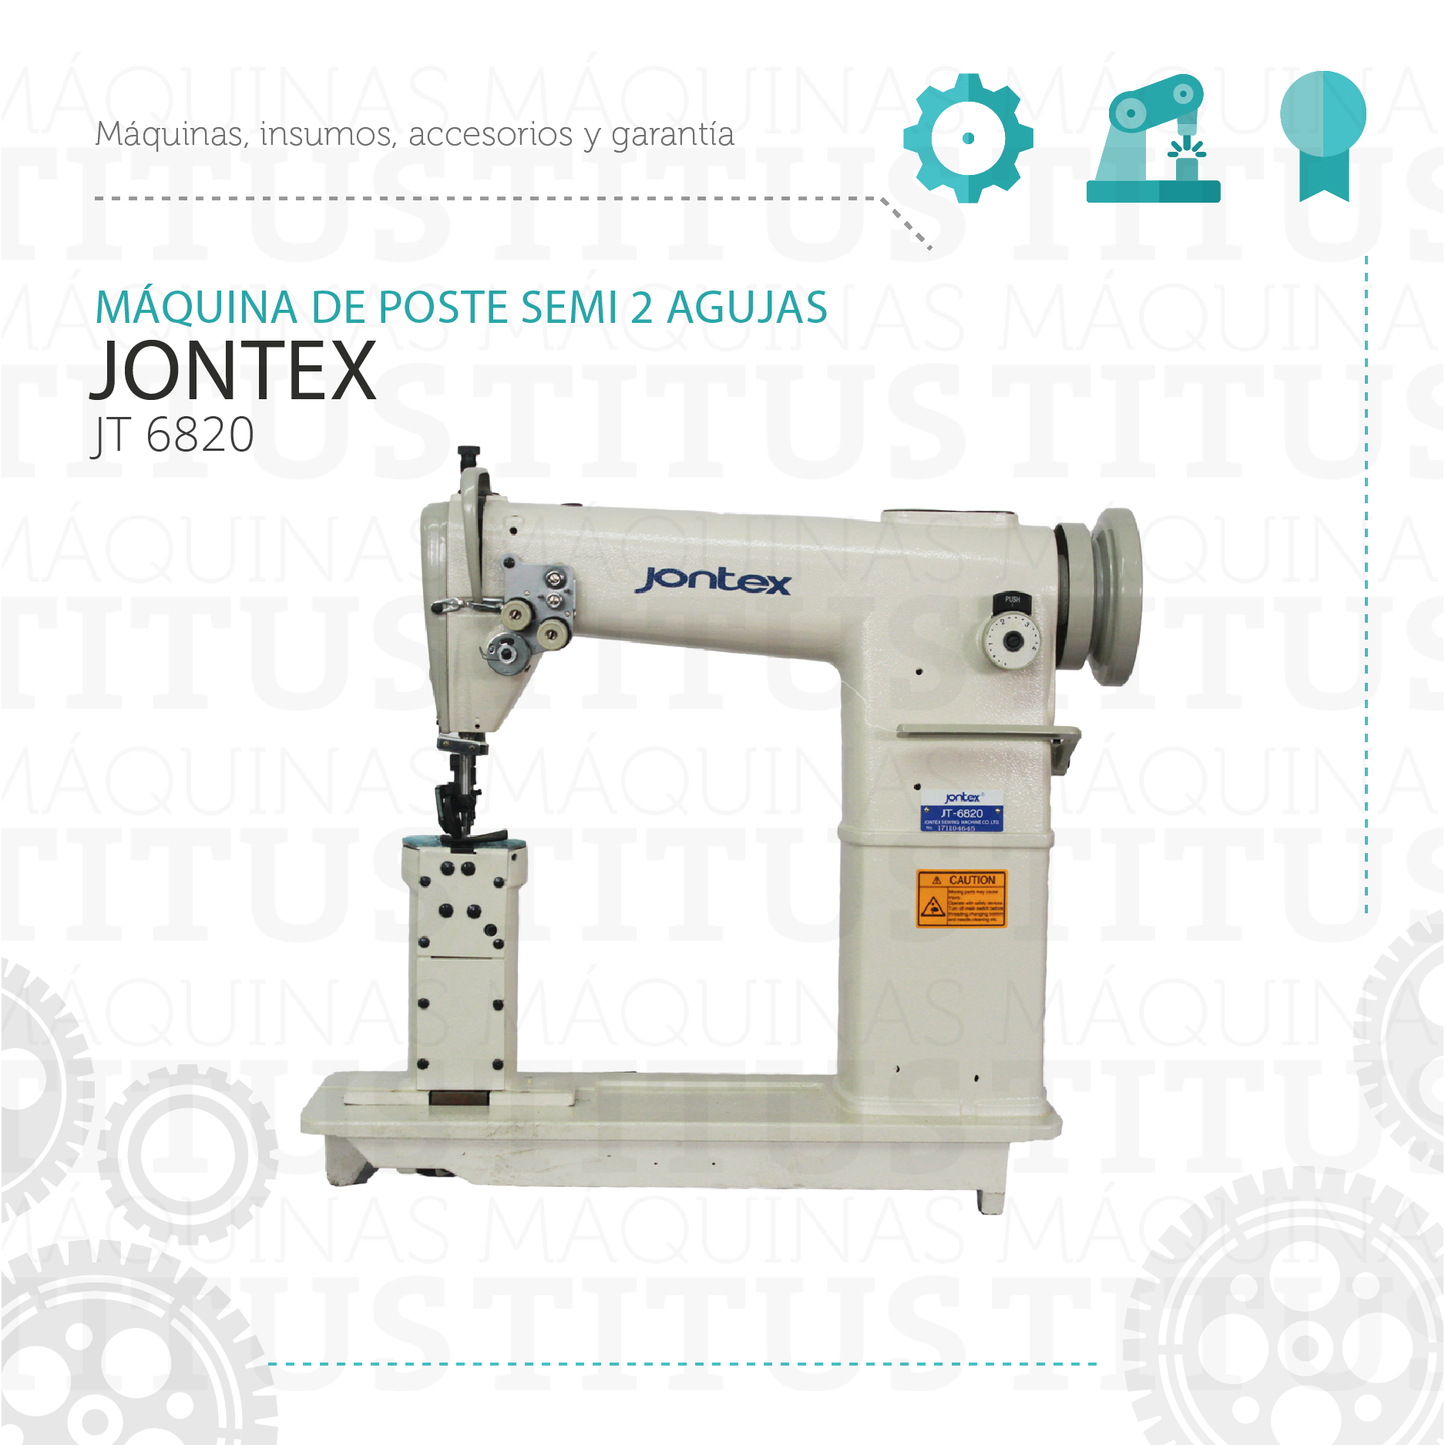 Máquina De Poste Jontex JT 6820 Semi 2 Agujas - Commercio